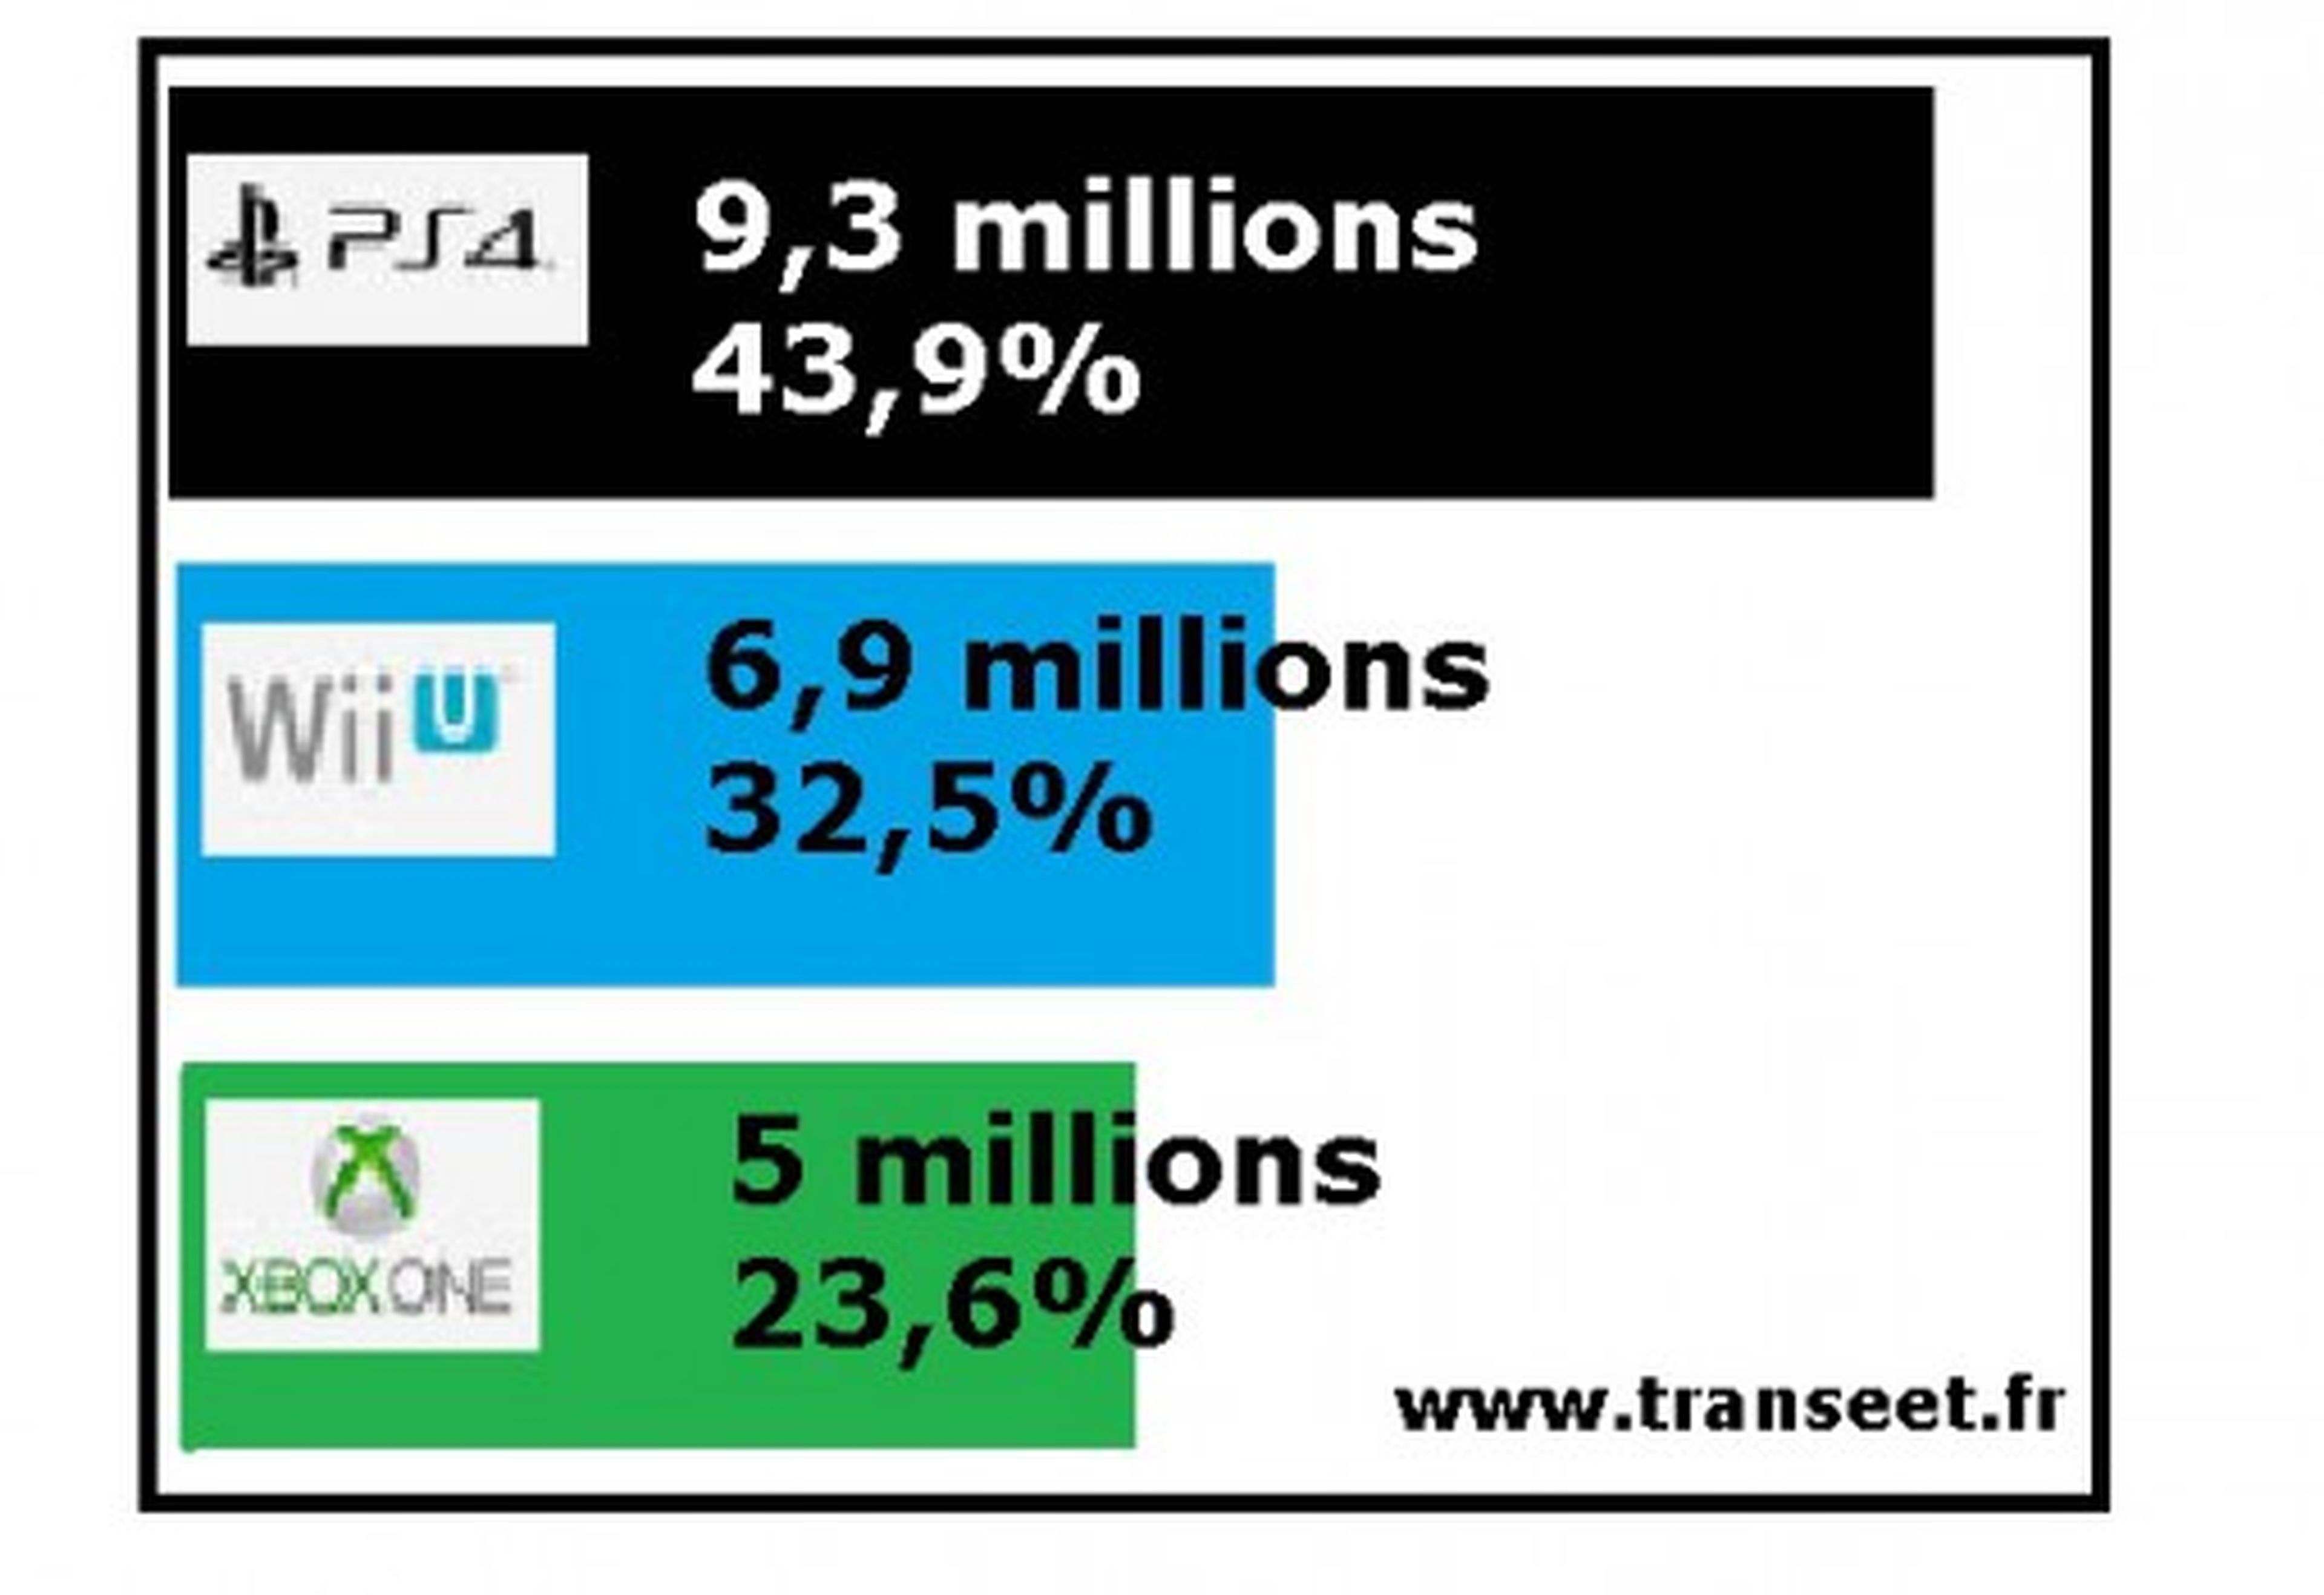 PS4 casi dobla en cuota de mercado a One